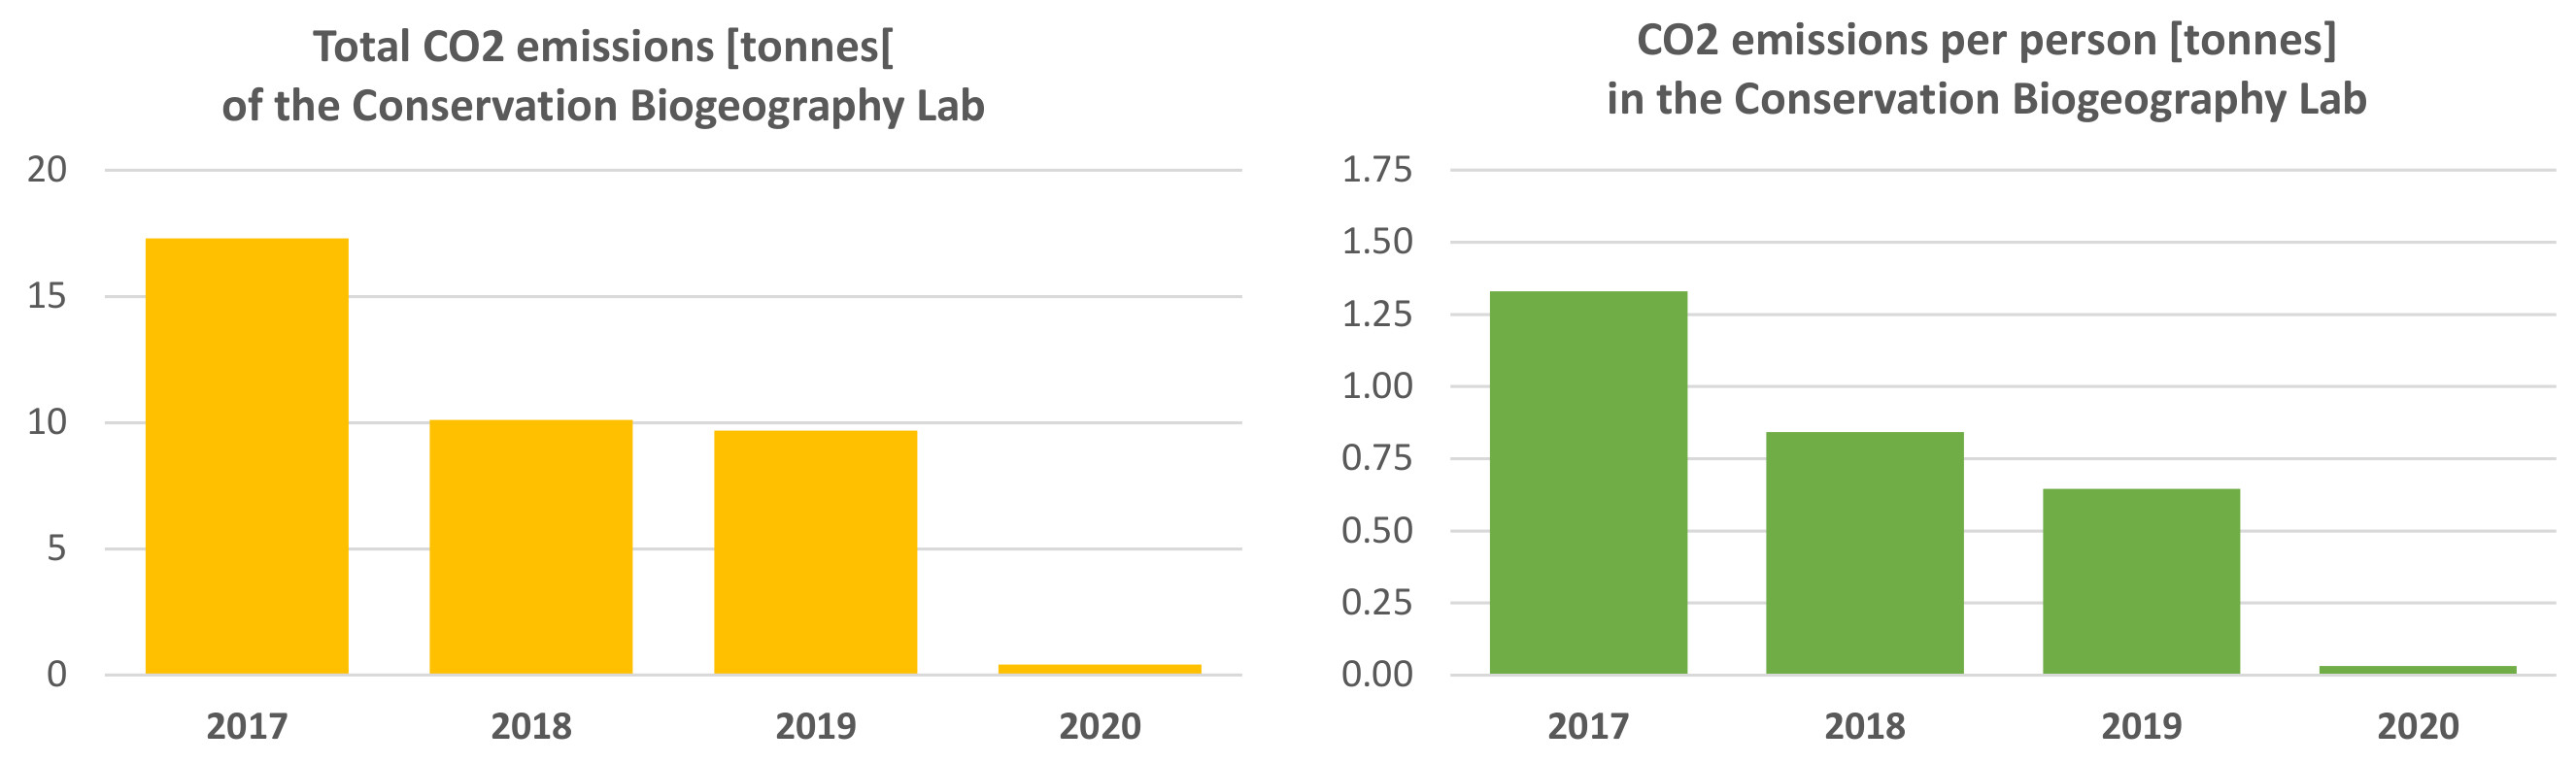 Emission tracker biogeo lab 2020